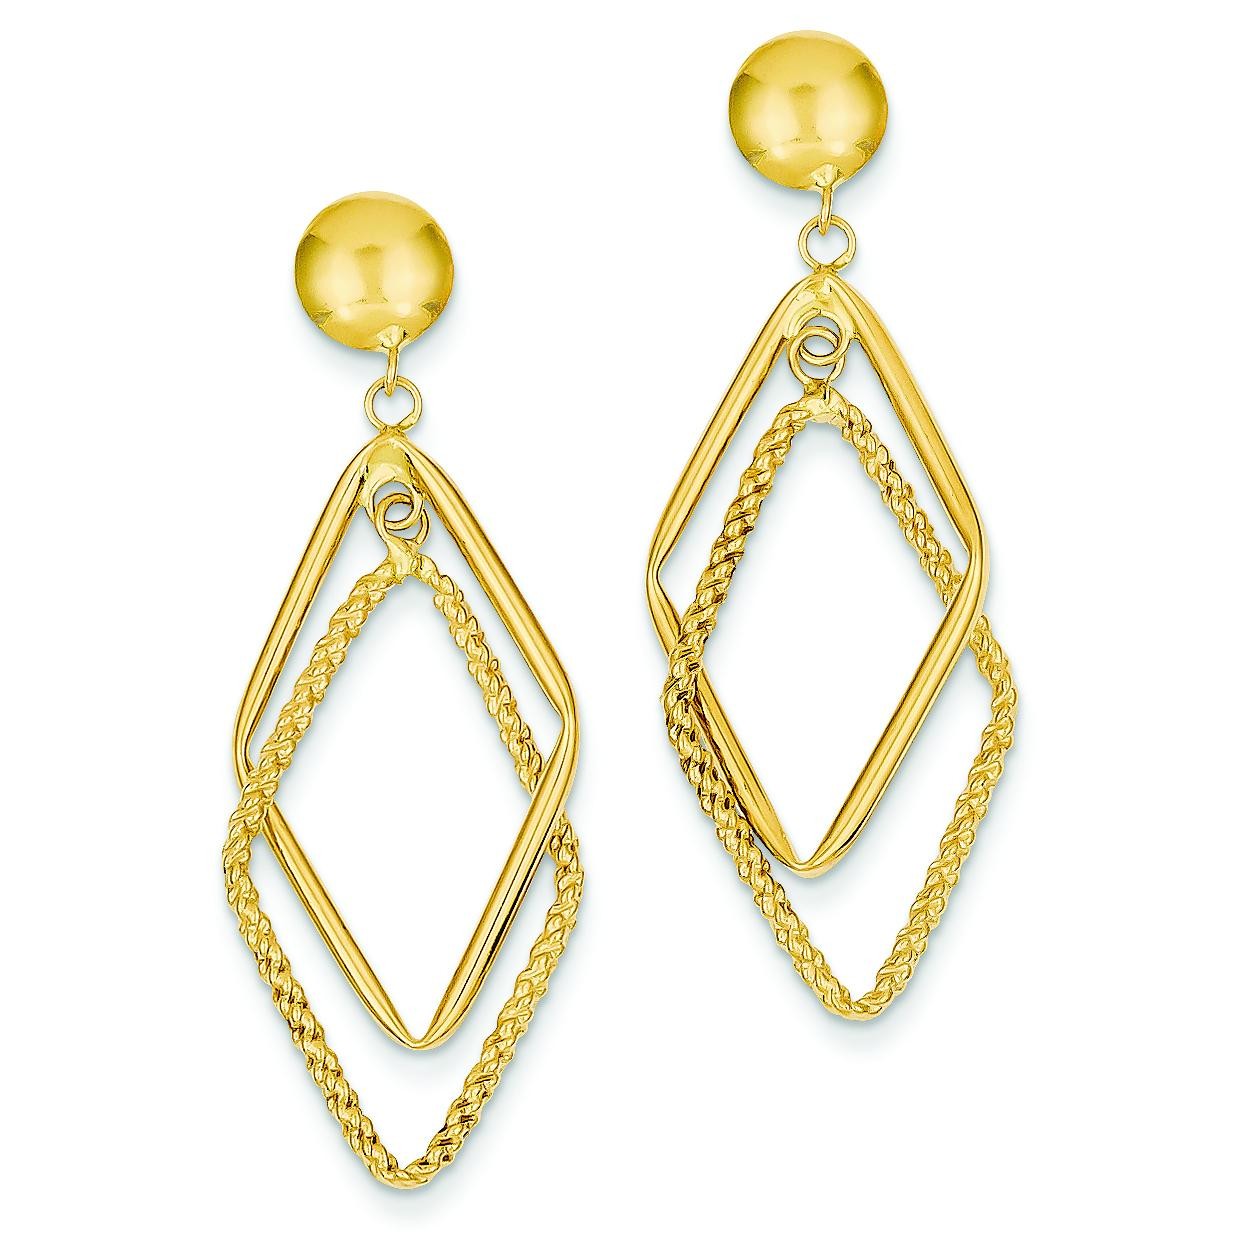 Patterned Diamond Shaped Post Earrings in 14k Yellow Gold 